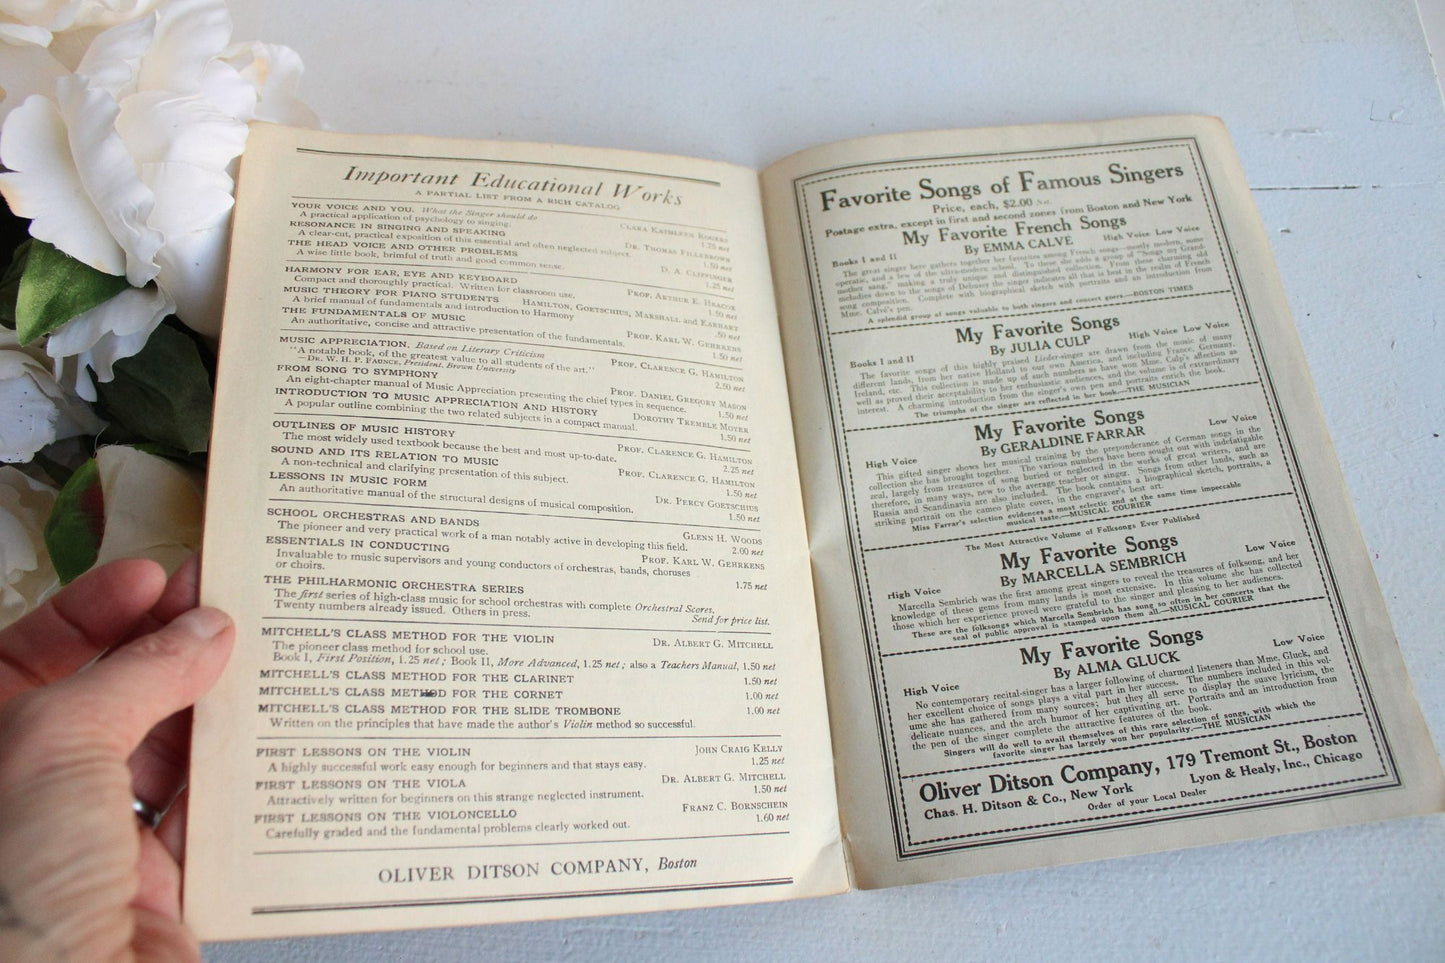 Vintage 1930s Music Booklet, Grand Opera Librettos, Samson And Delilah